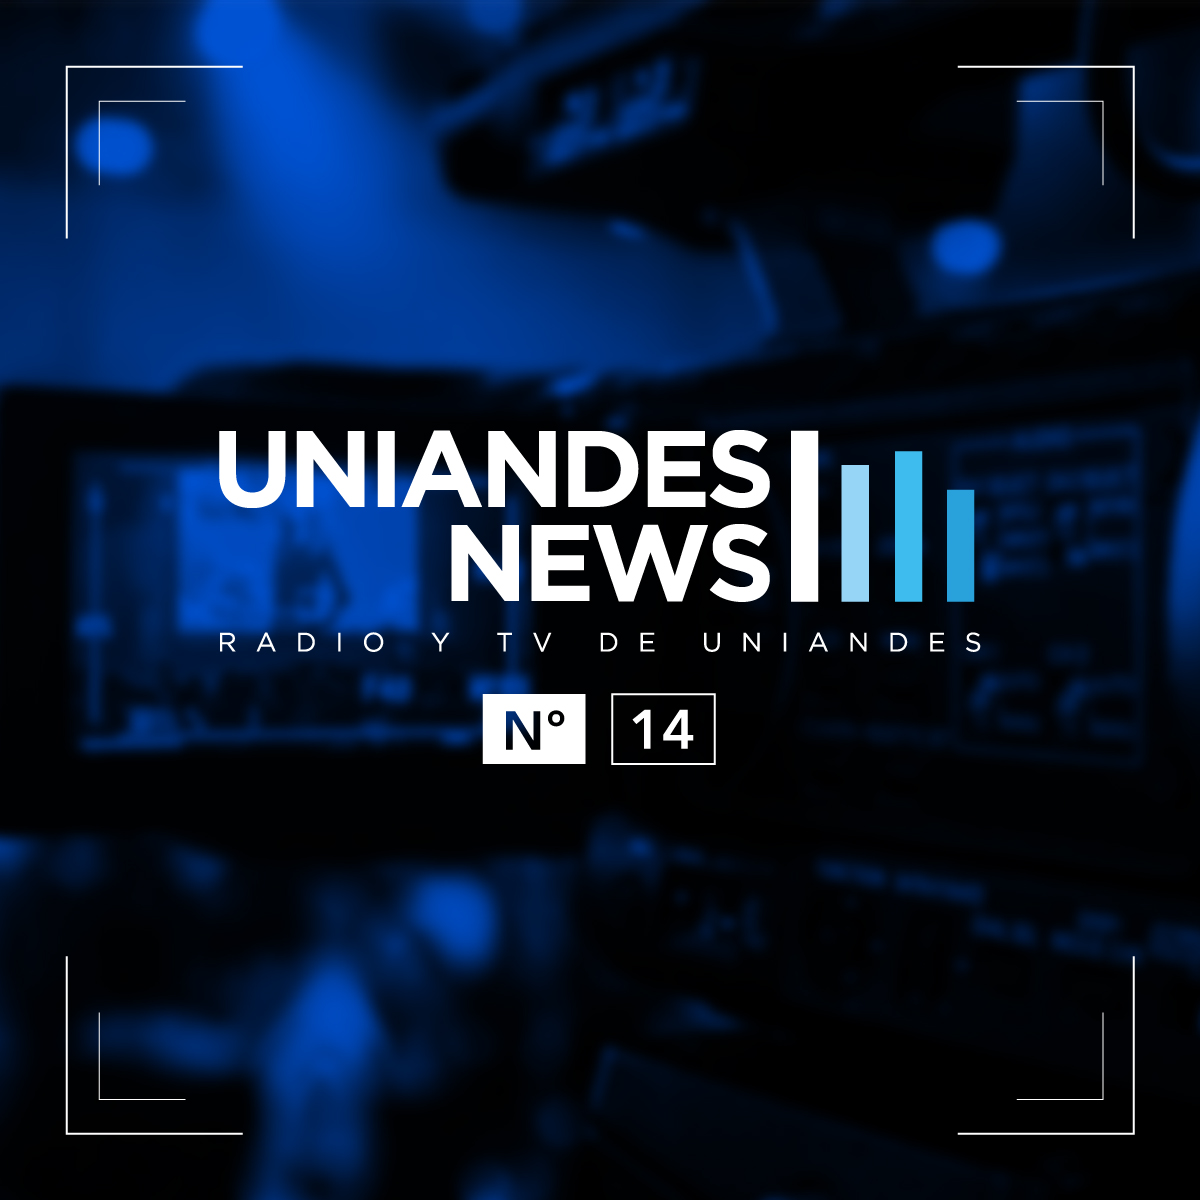 Uniandes News 14